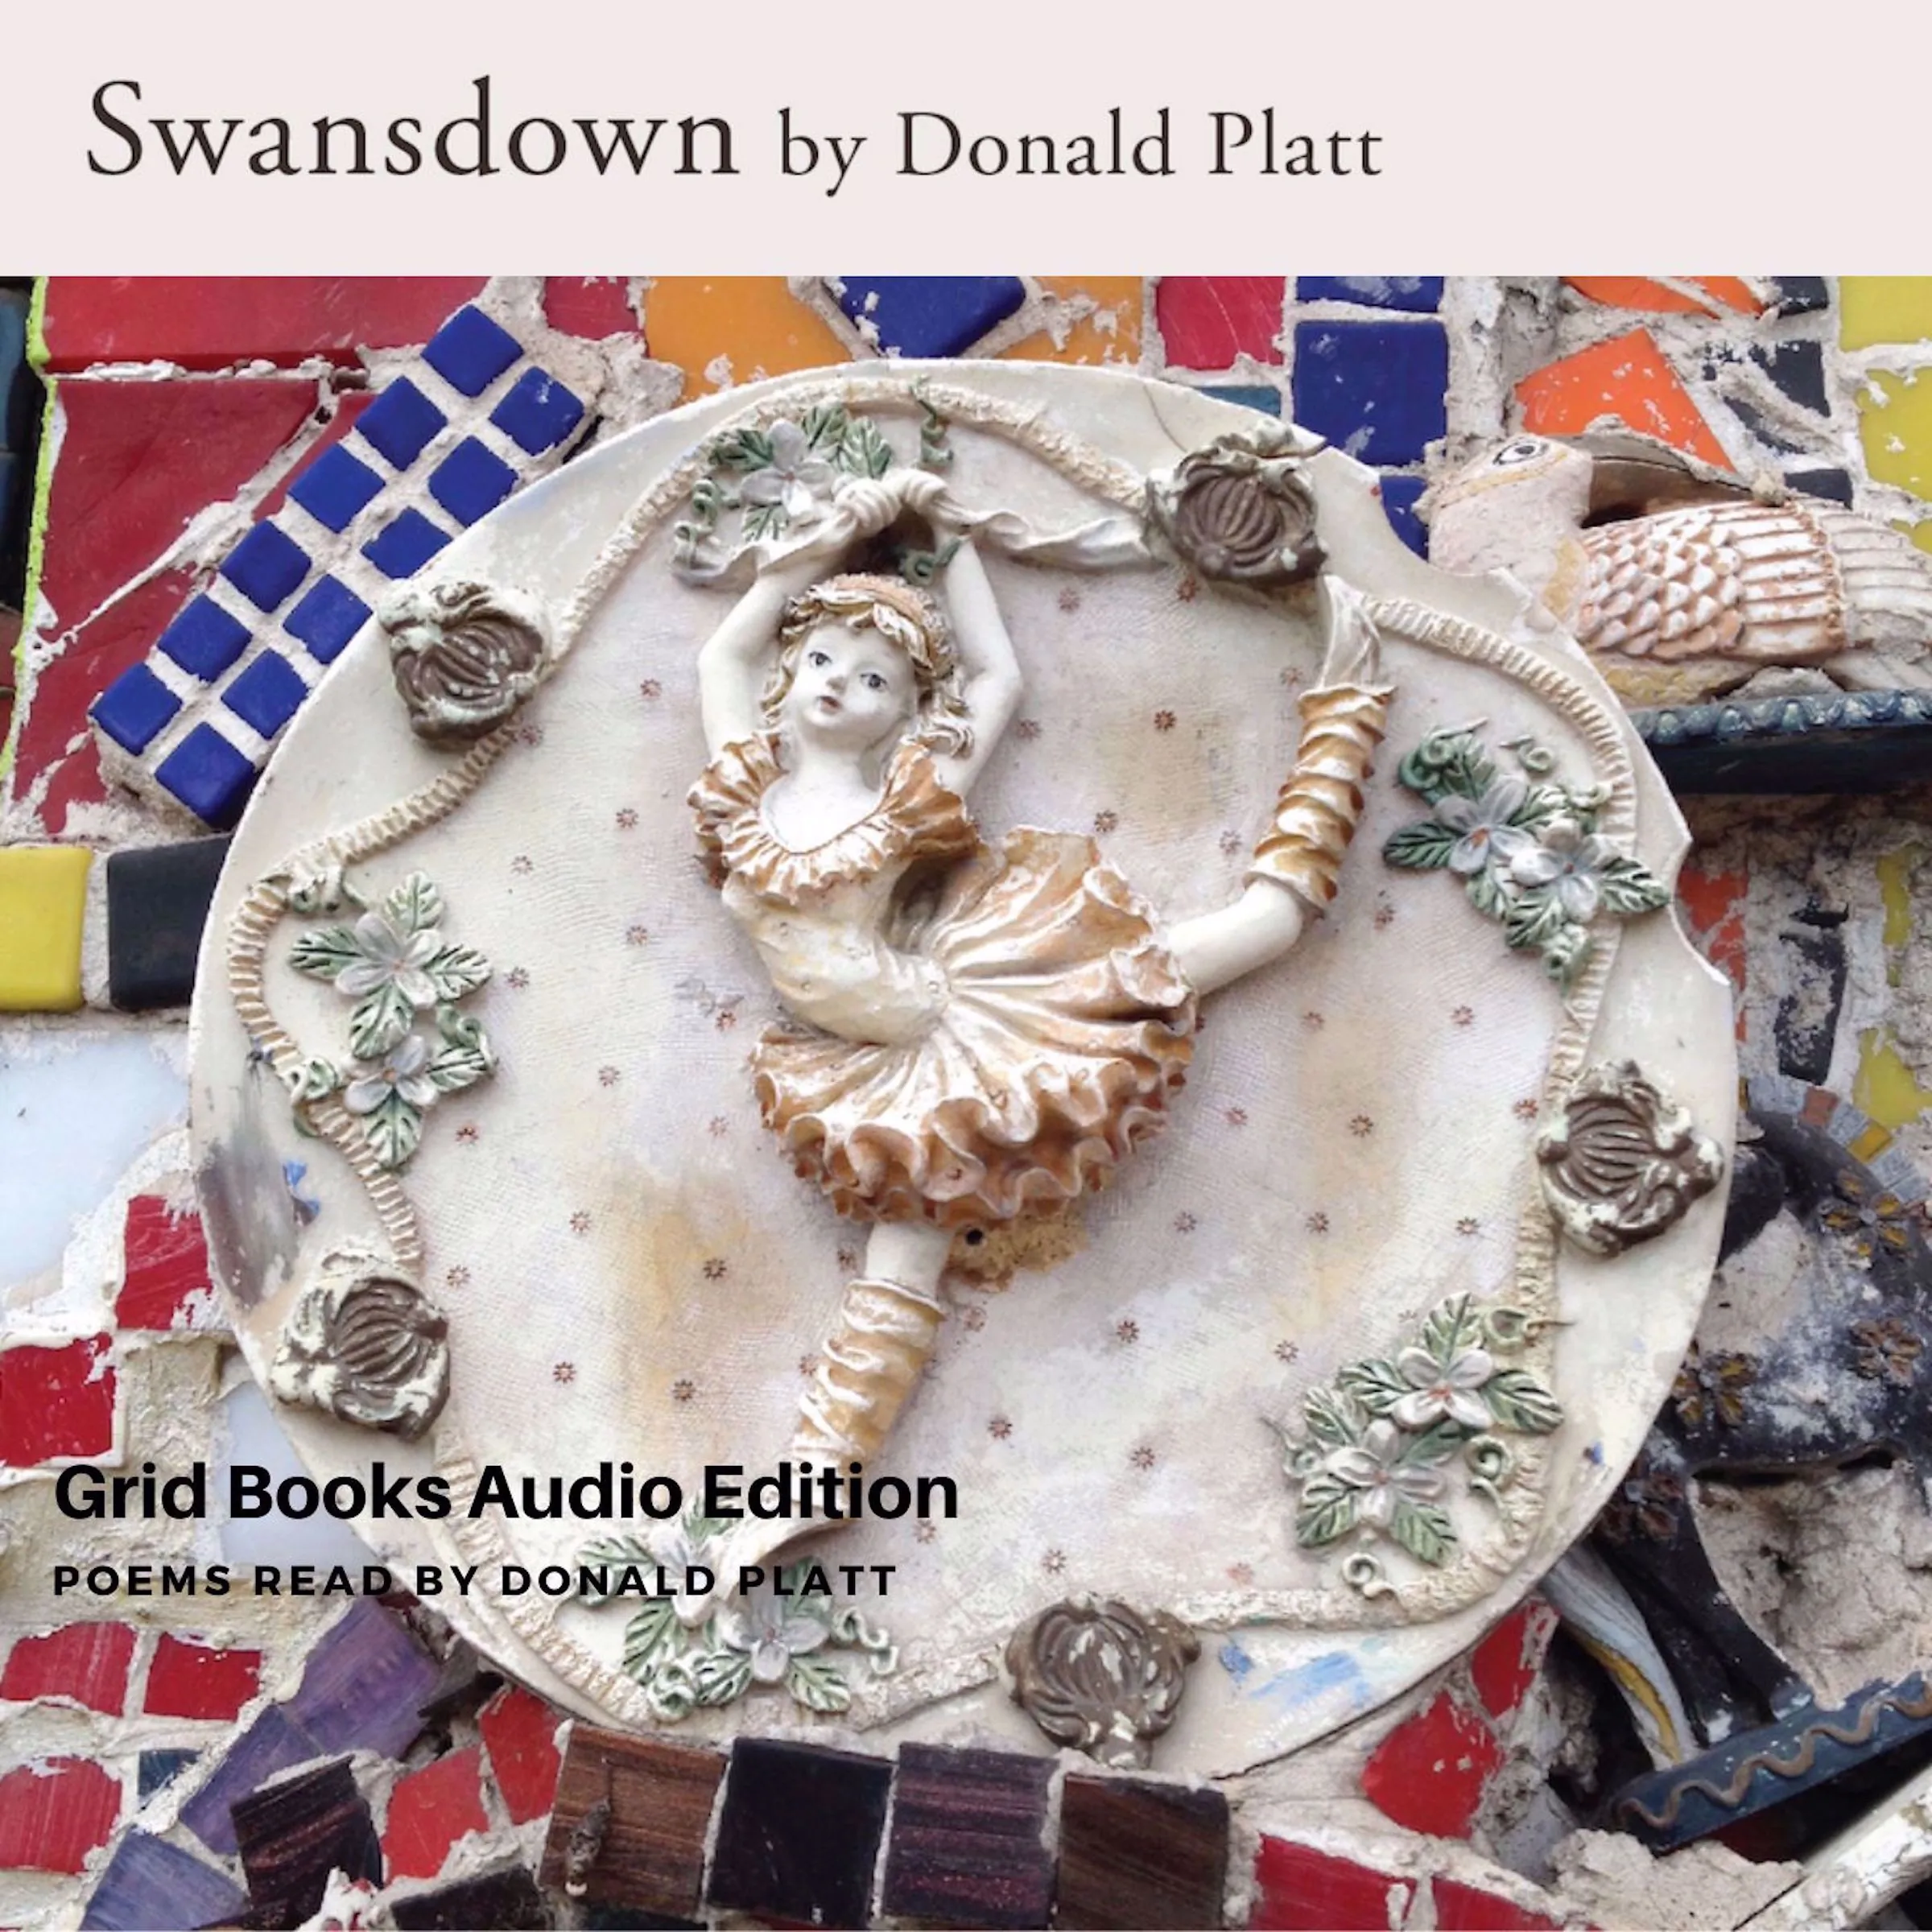 Swansdown Audiobook by Donald Platt